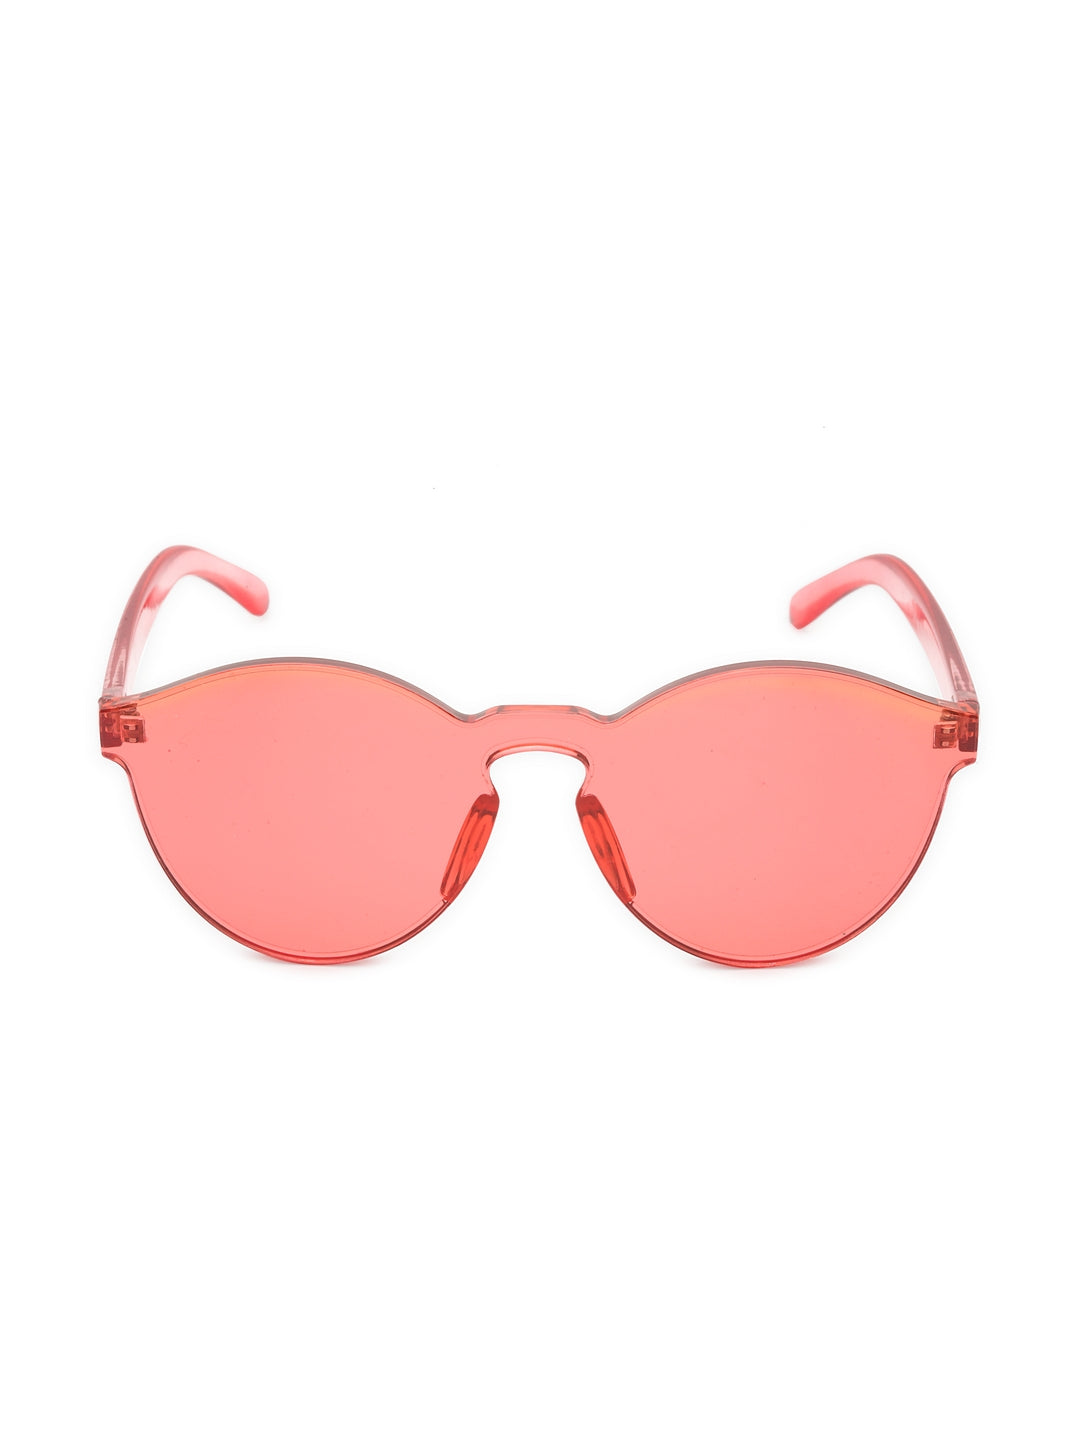 Avant-Garde Paris Transparent Rimless One Piece Candy Color Sunglasses